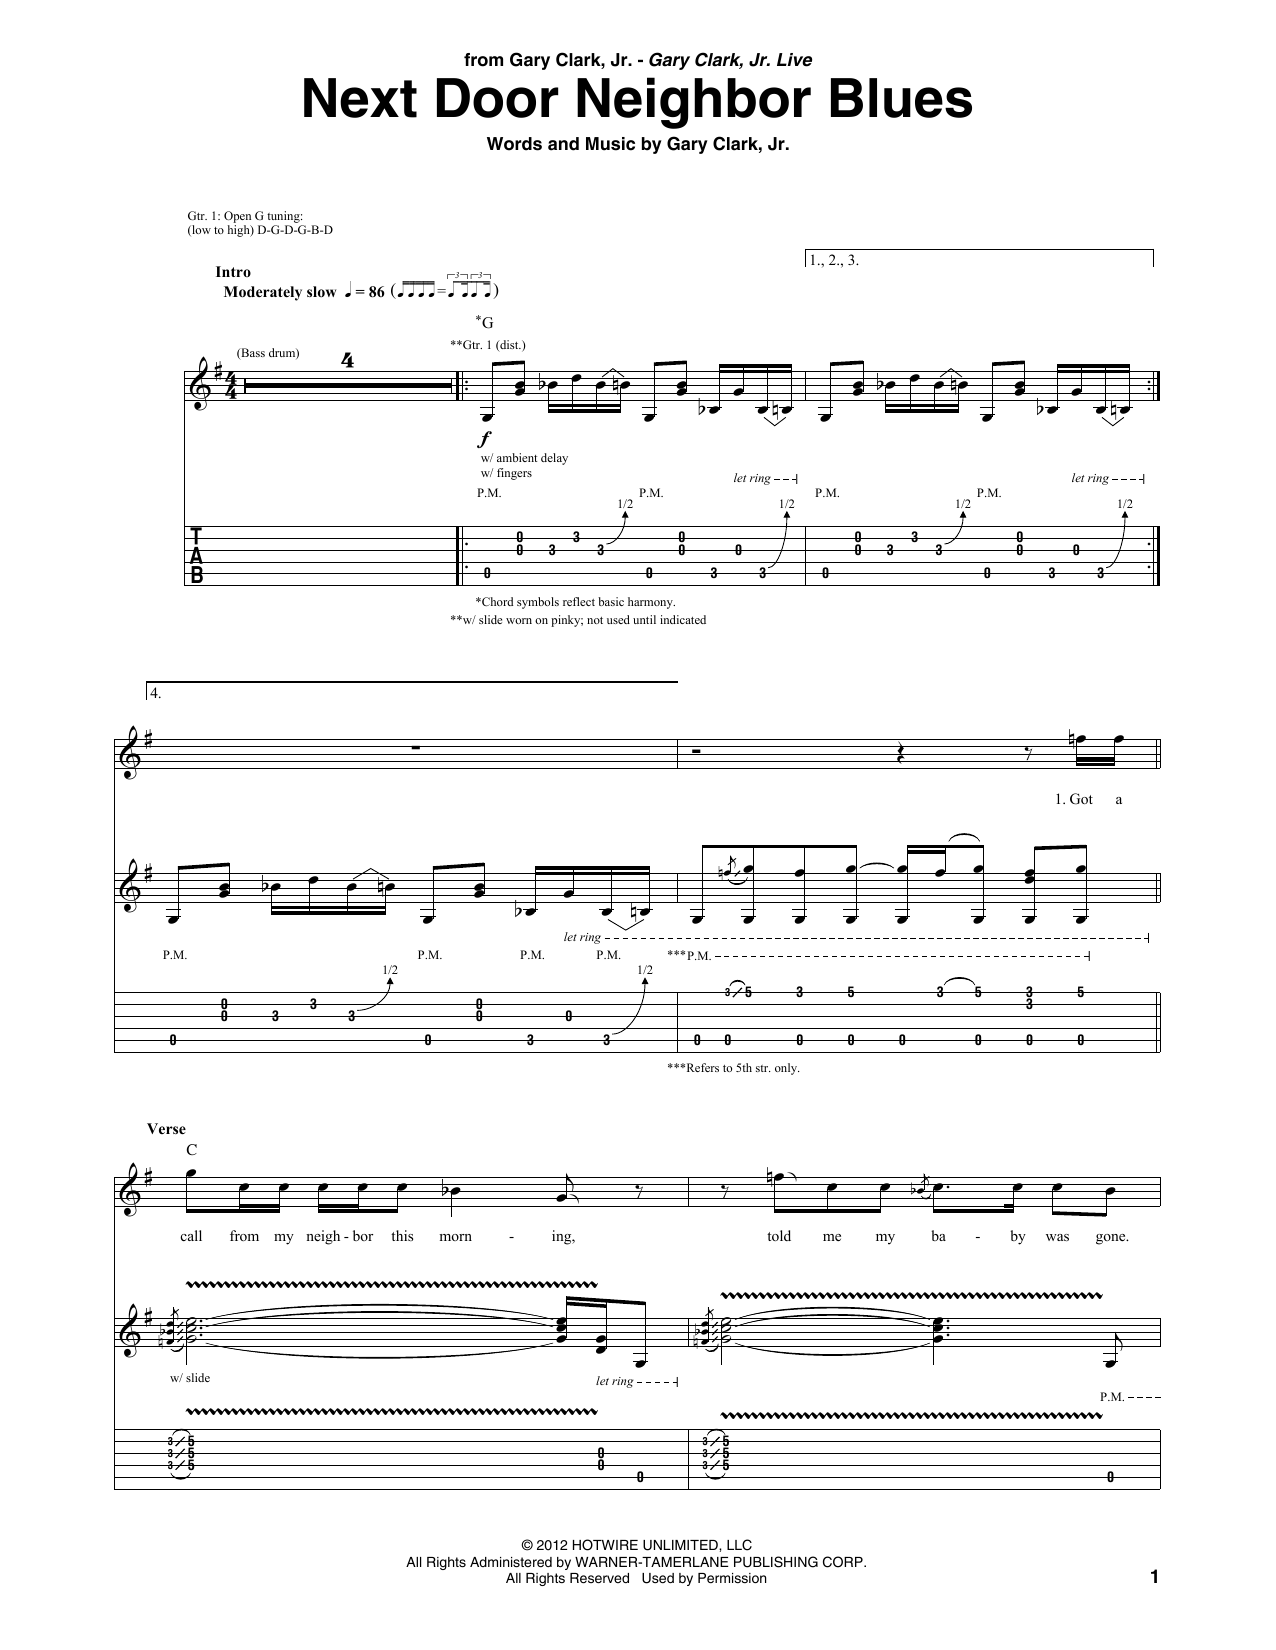 Gary Clark, Jr. Next Door Neighbor Blues Sheet Music Notes & Chords for Guitar Tab - Download or Print PDF